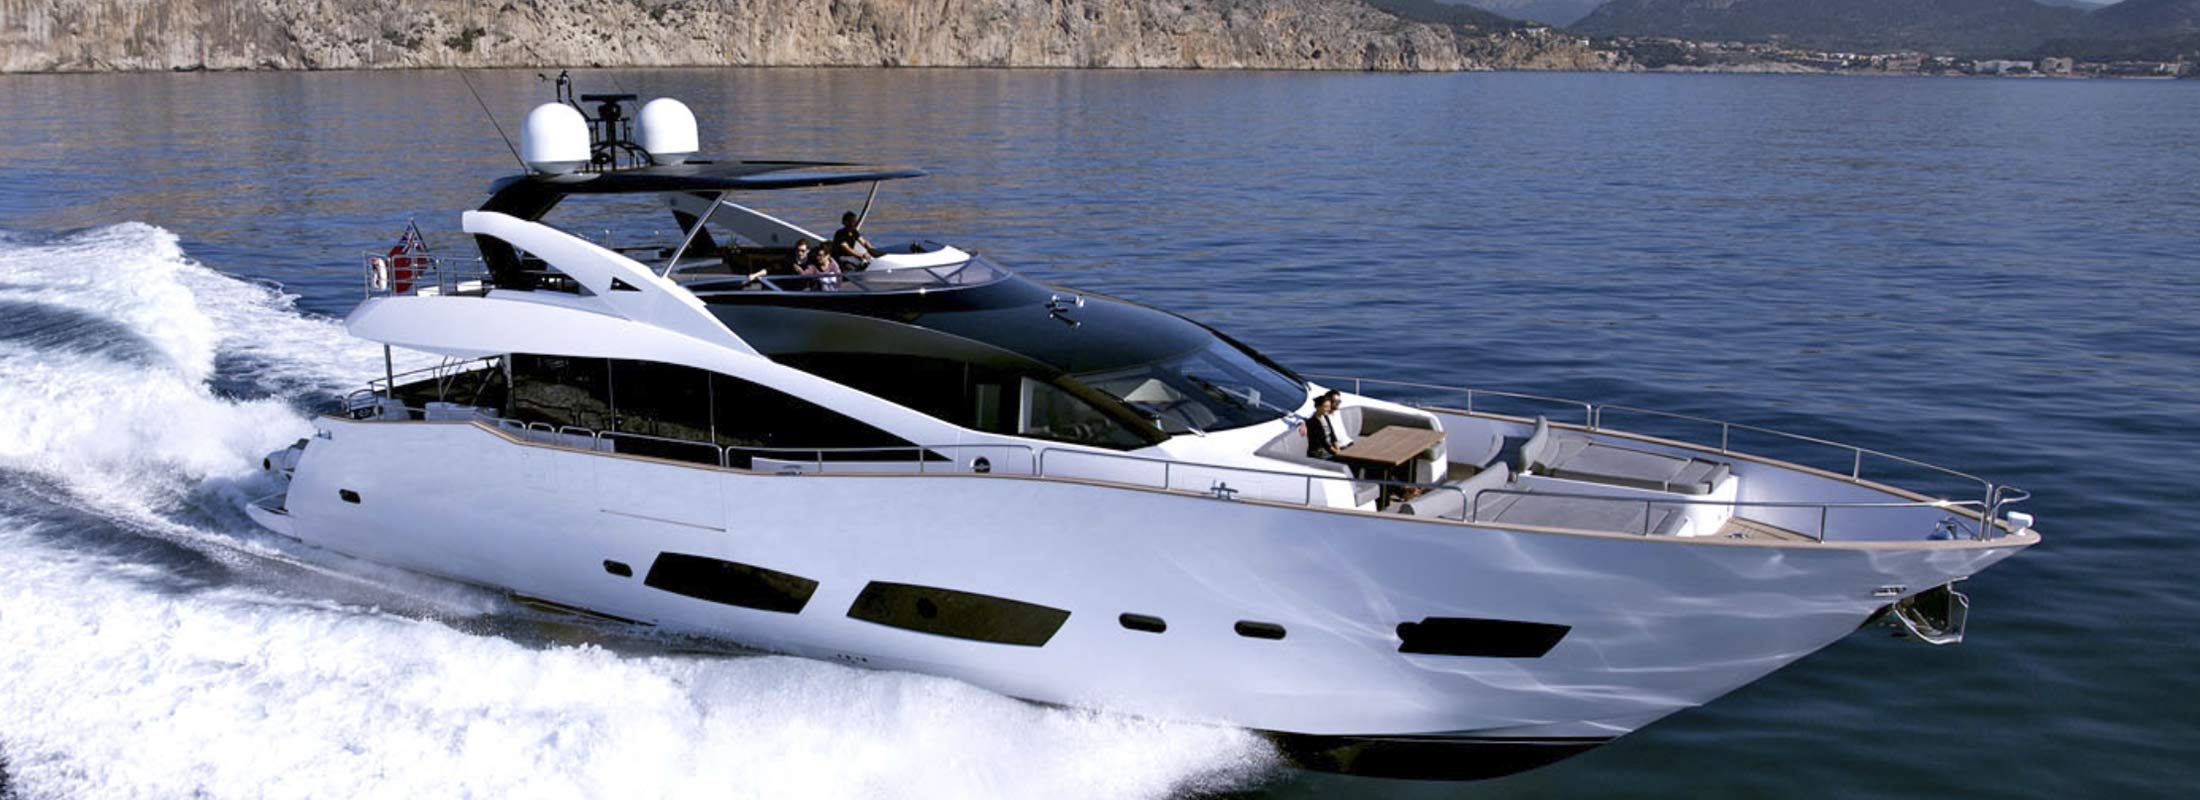 Aqua Libra Motor Yacht for Charter Mediterranean slider 1